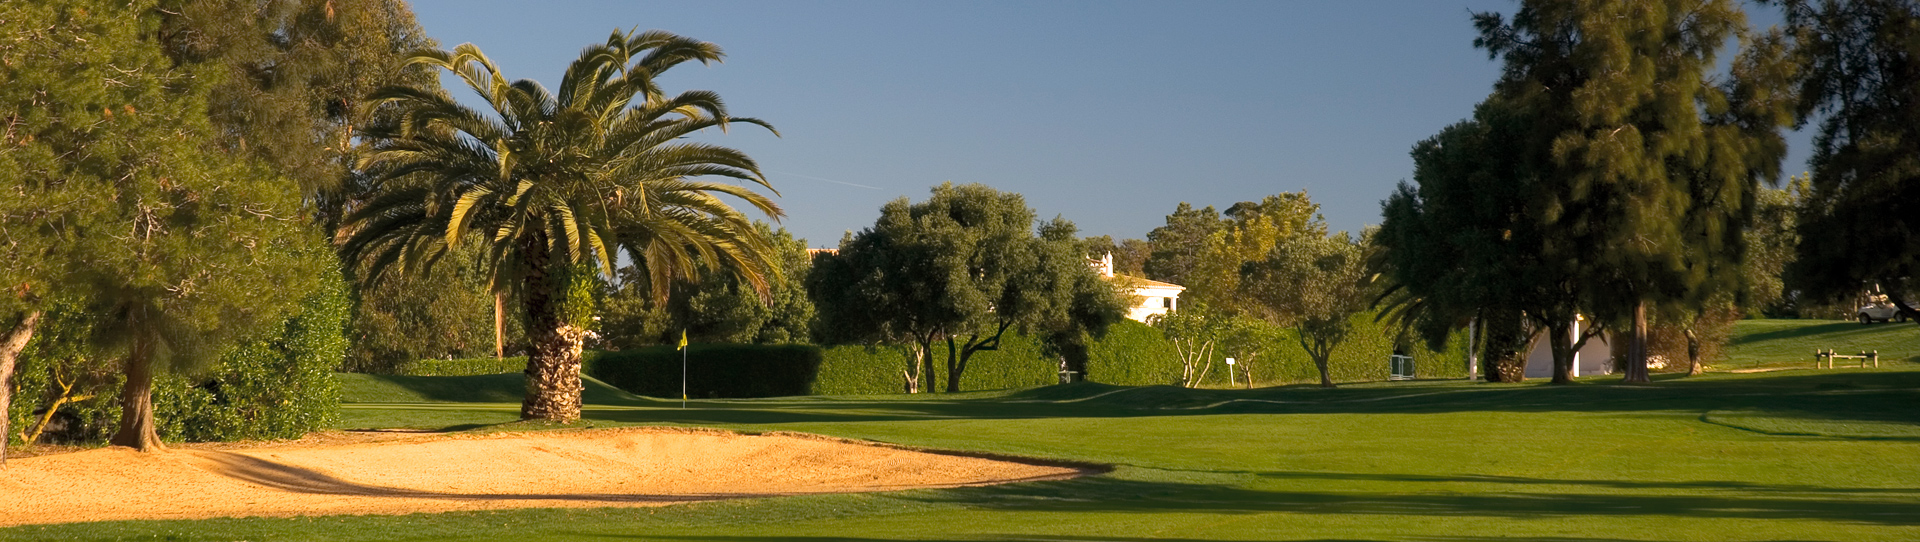 Portugal golf courses - Alto Golf Course - Photo 1